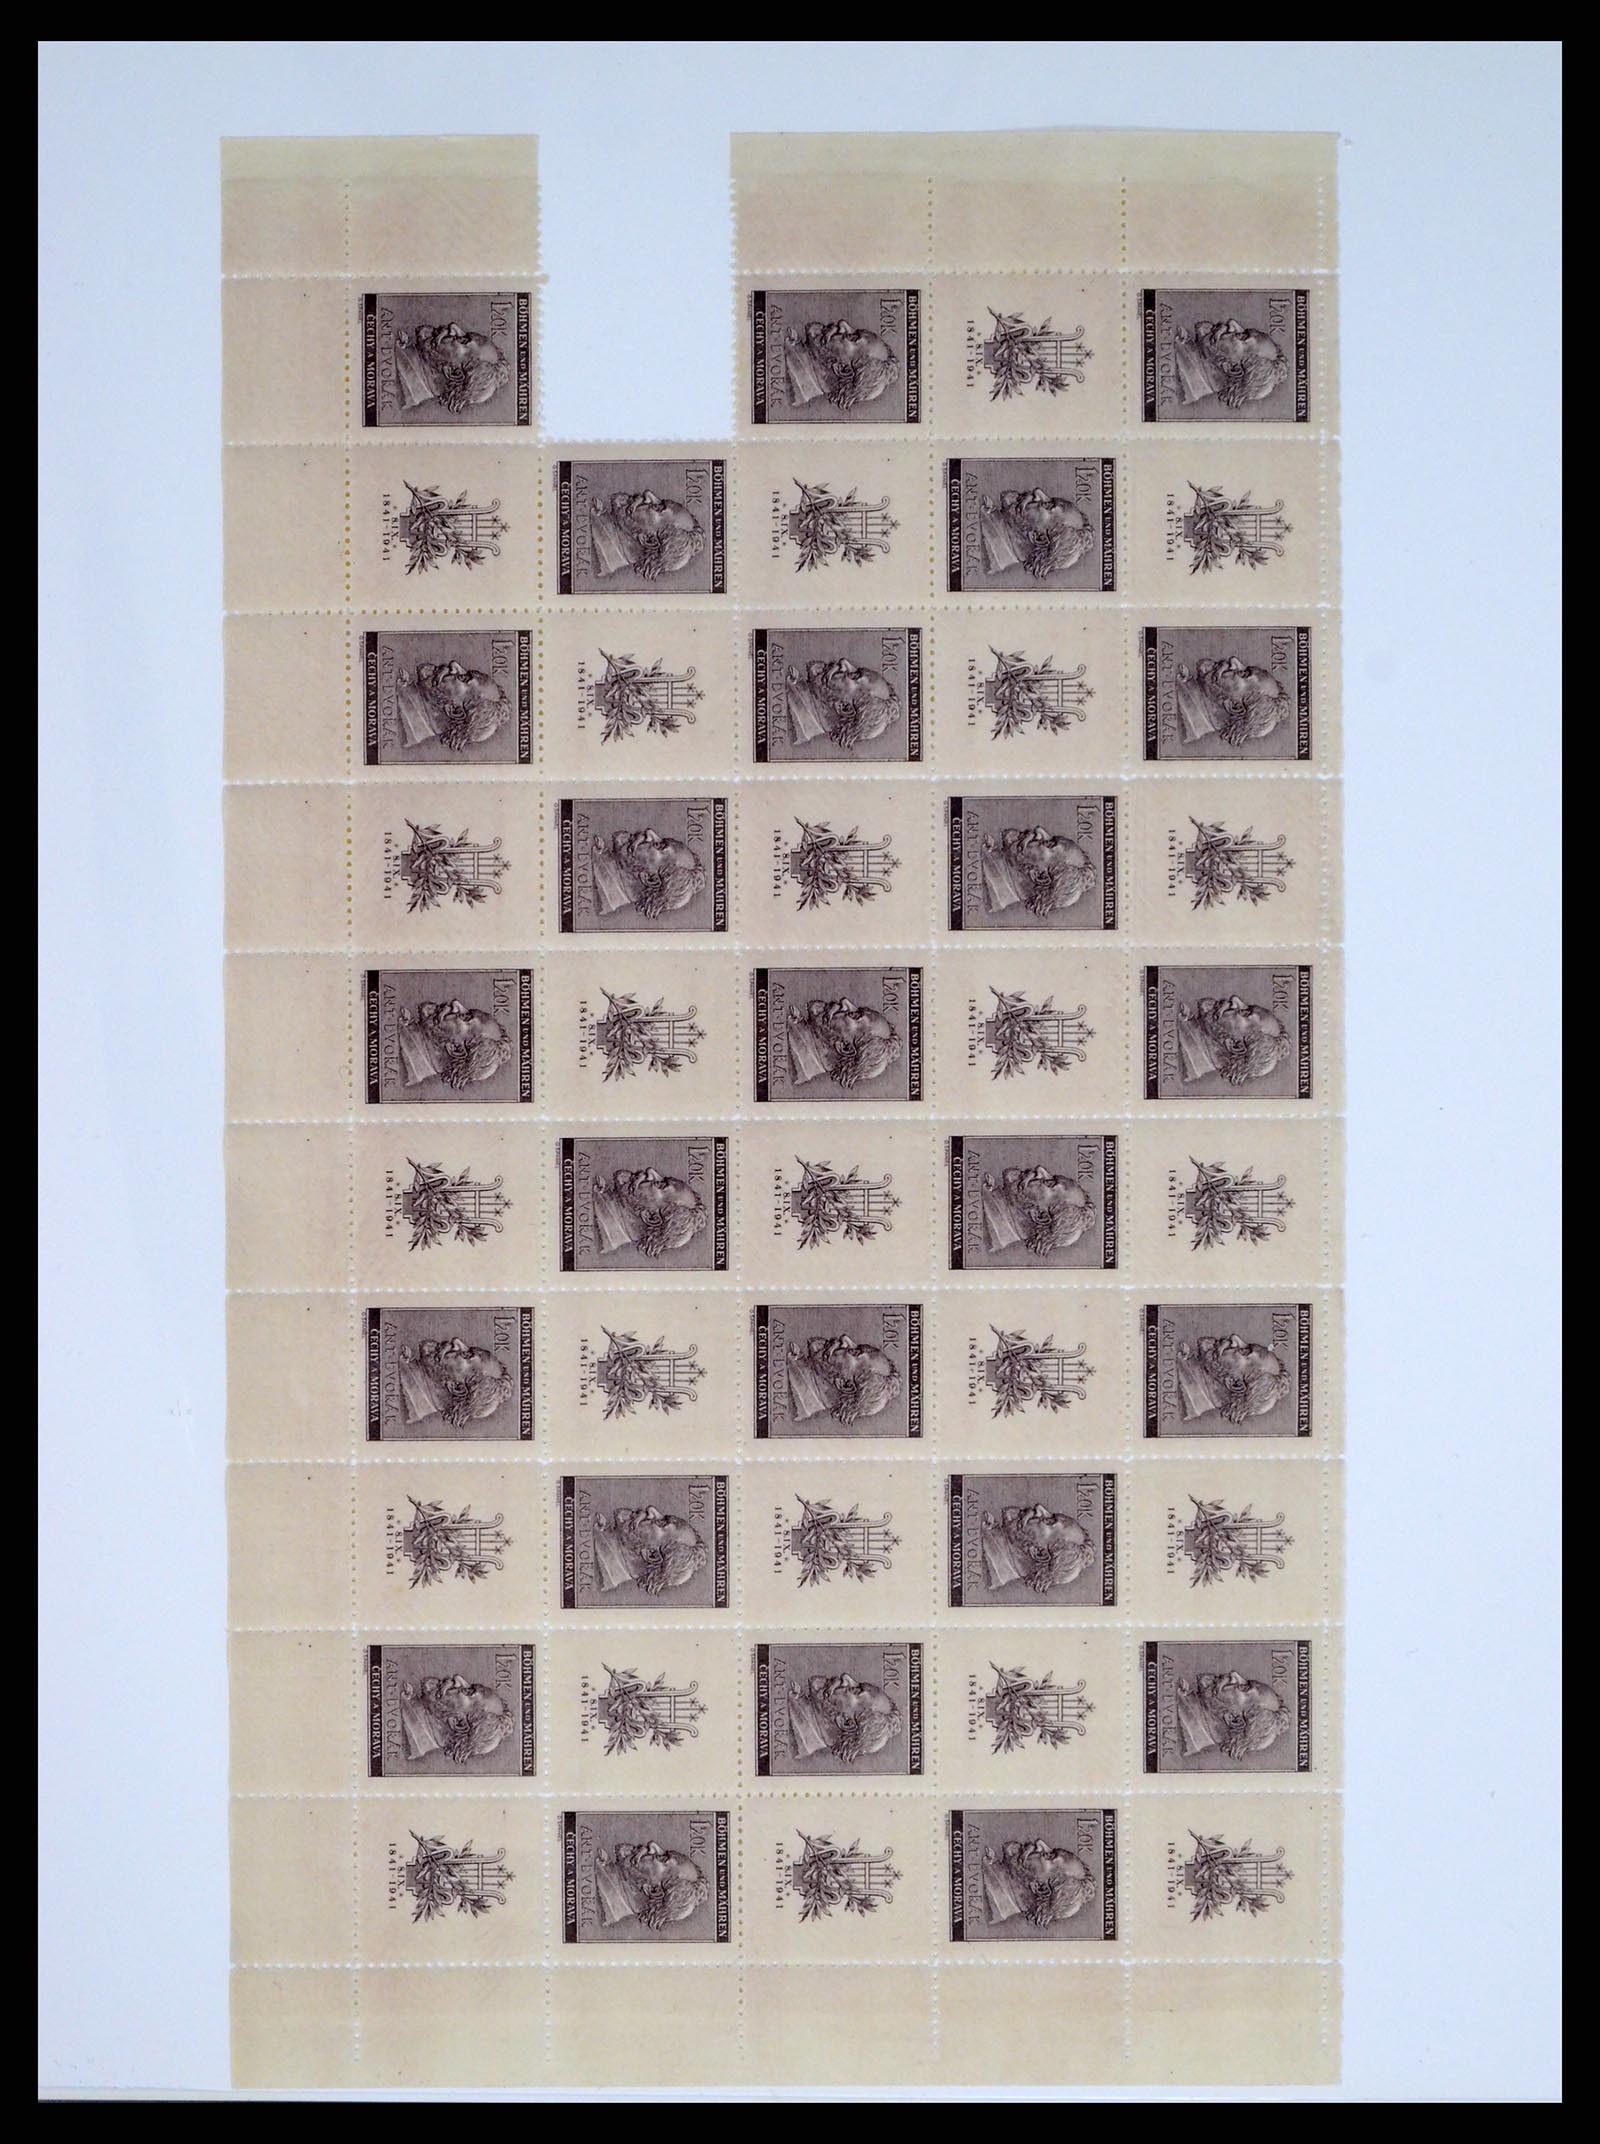 37535 013 - Stamp collection 37535 German occupation second worldwar 1939-1945.